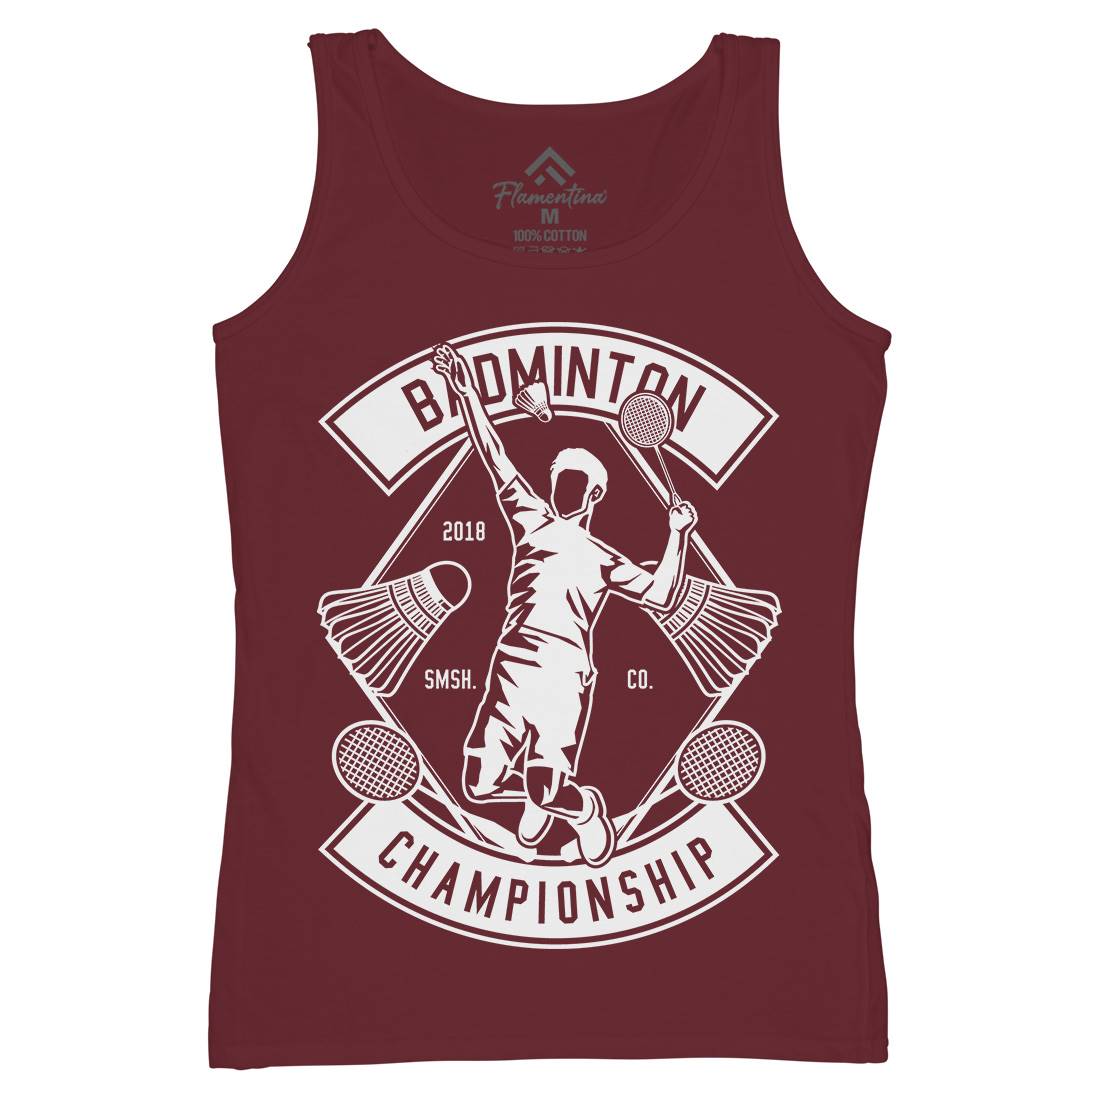 Badminton Championship Womens Organic Tank Top Vest Sport B486